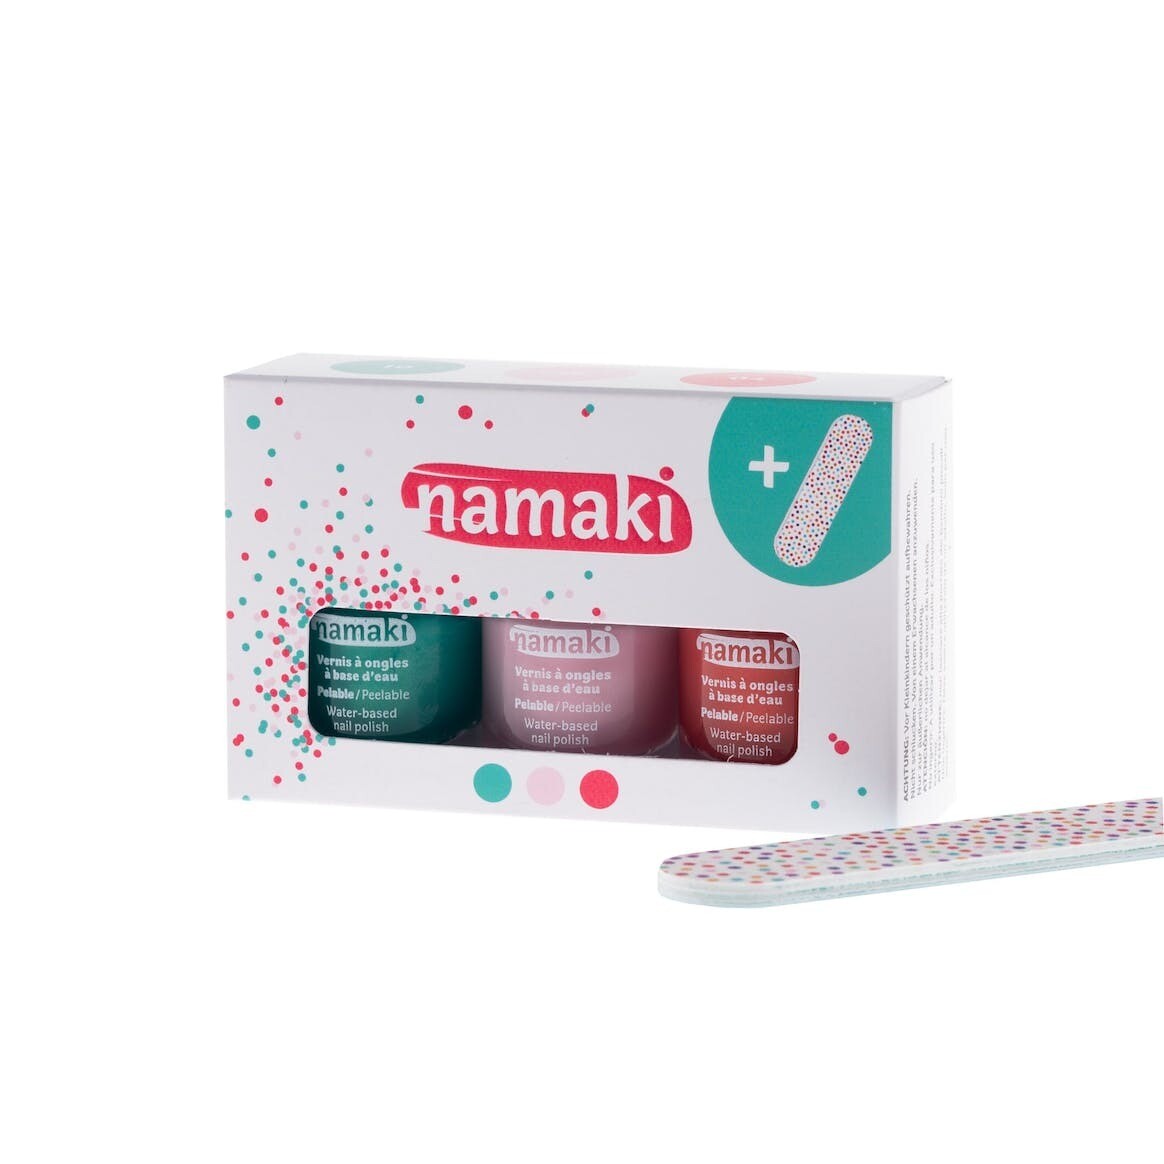 Namaki cosmetics - Box of 3 Caribbean nail polishes